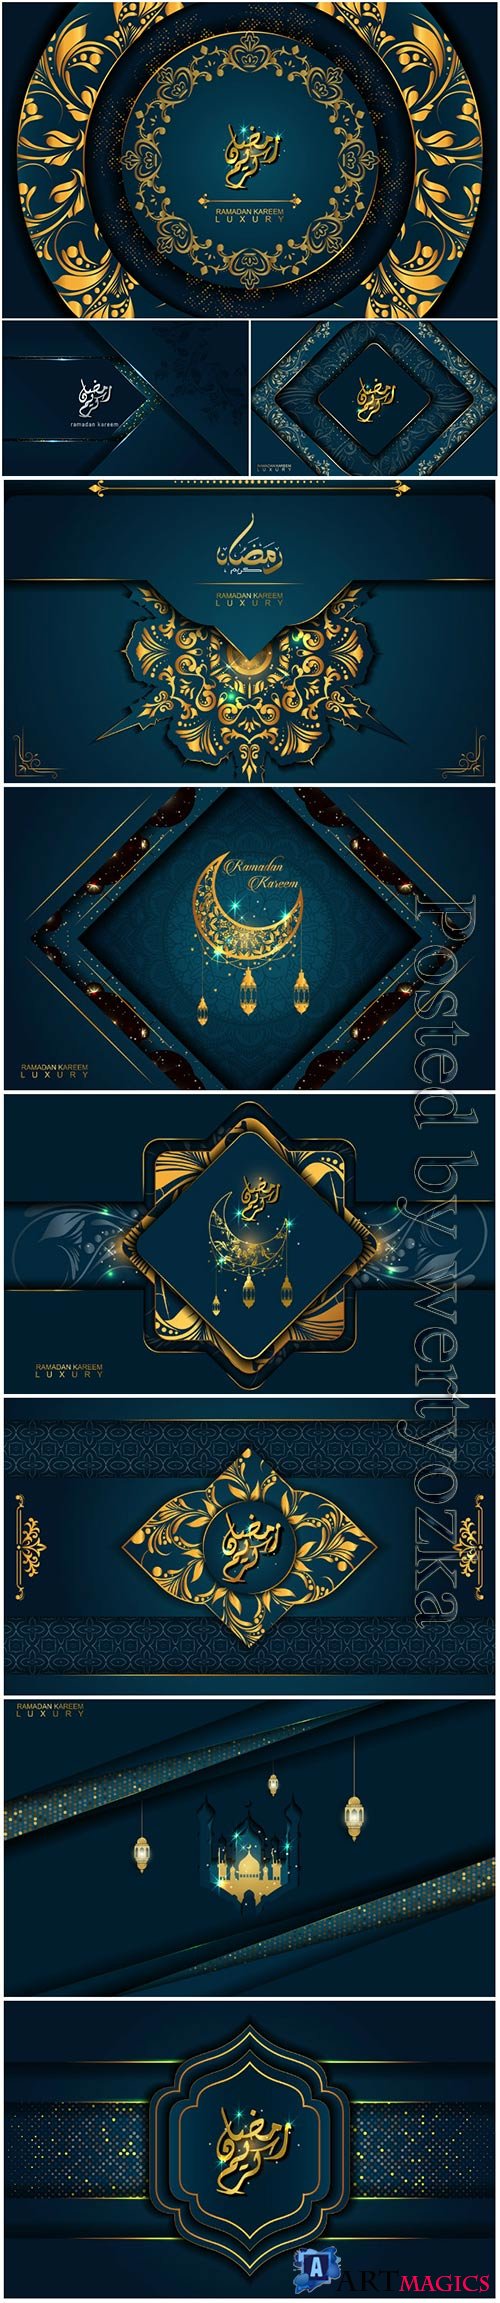 Ramadan Kareem in luxury style with Arabic calligraphy